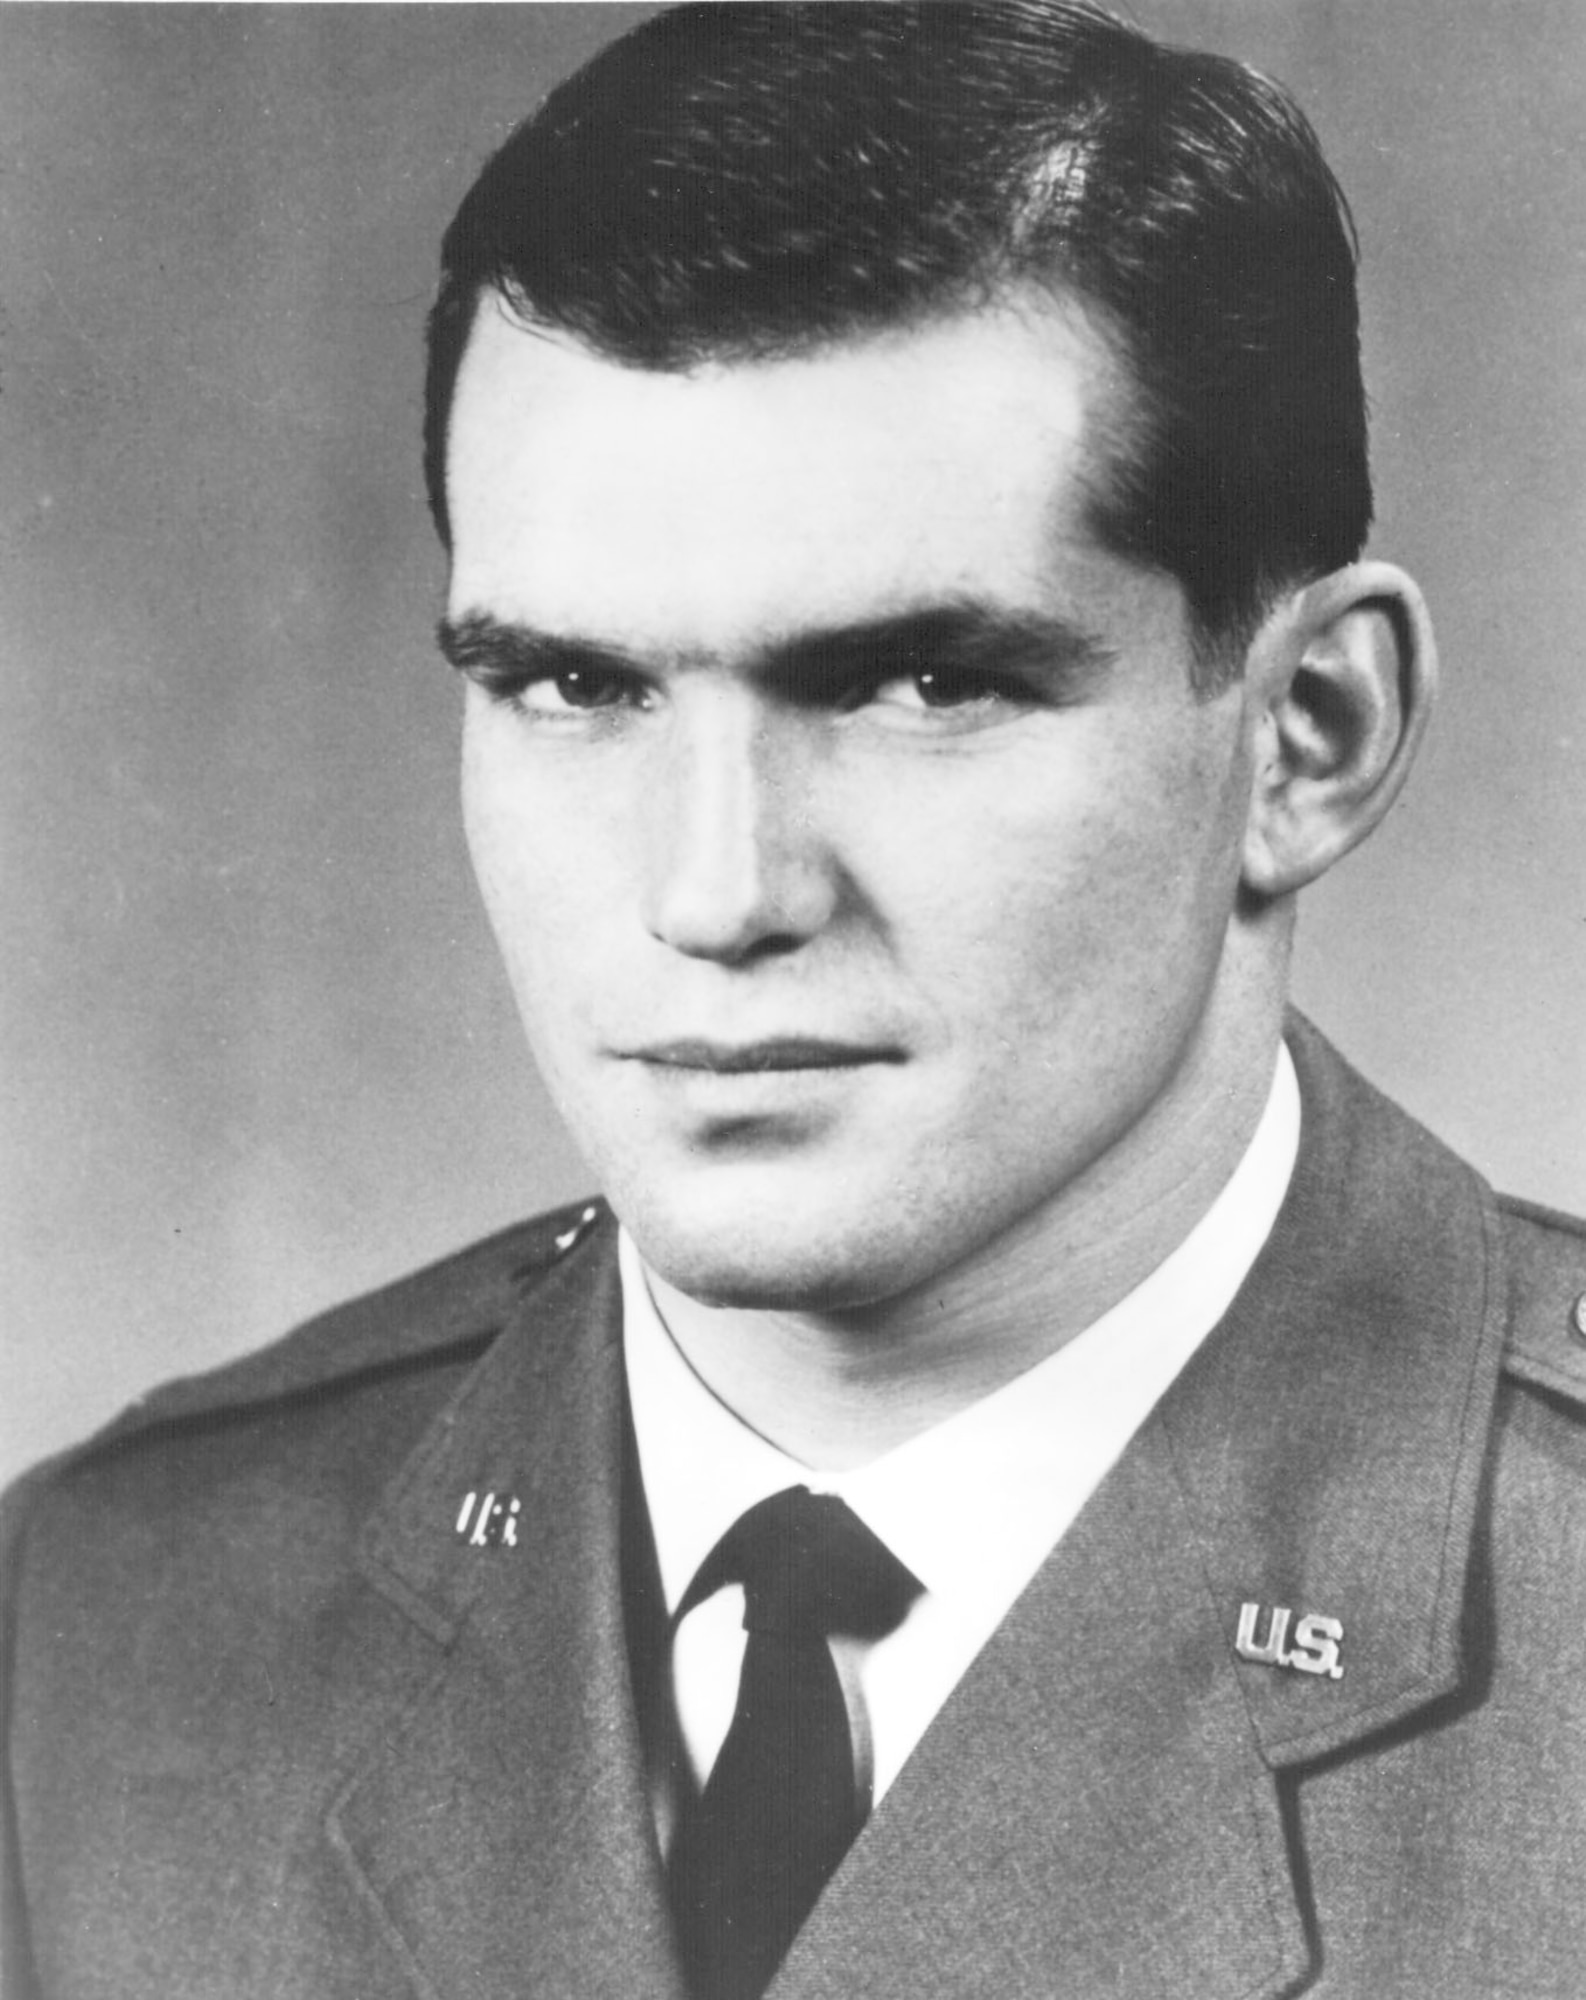 Medal of Honor recipient, Vietnam